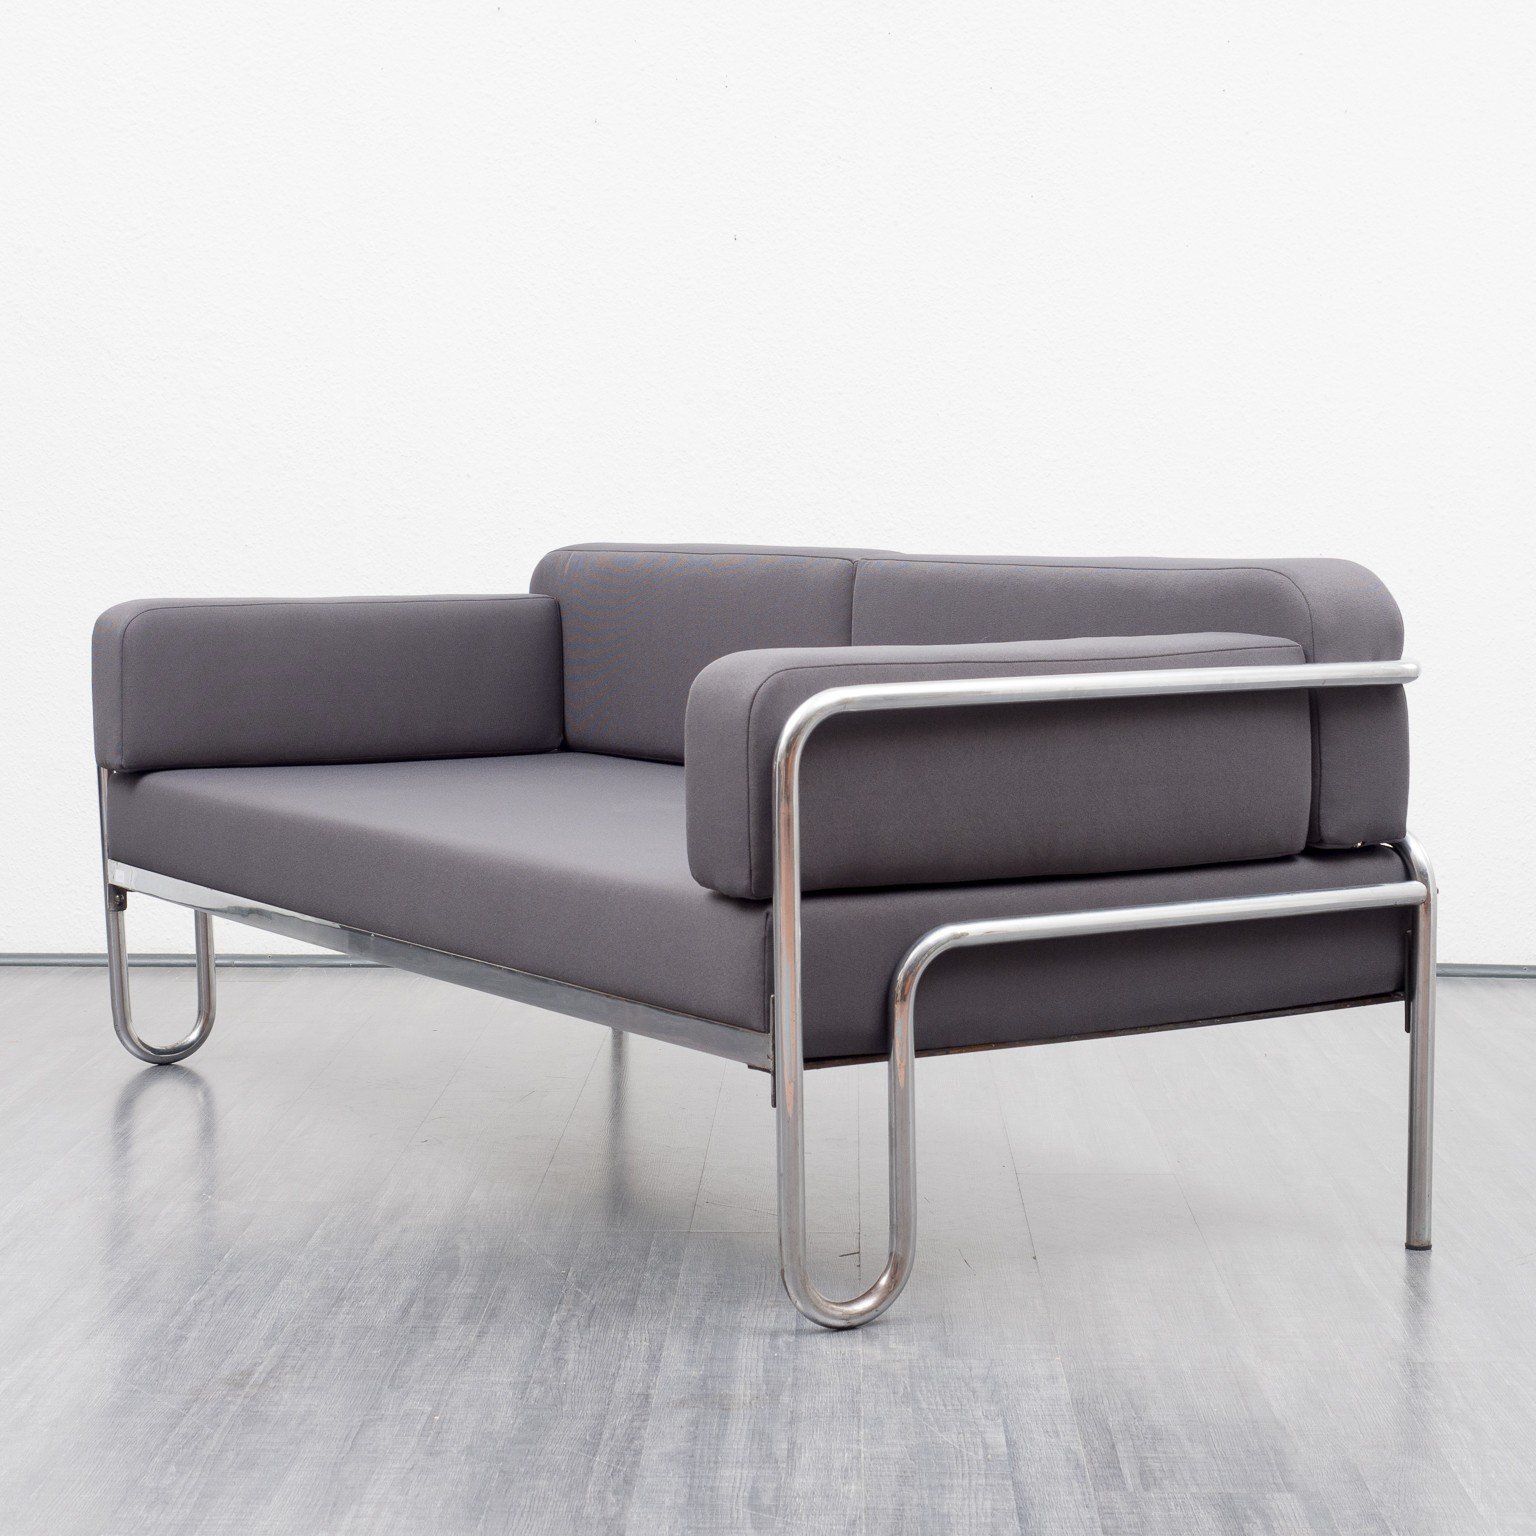 Bauhaus sofa vintage, new upholstery 1930s Design Market